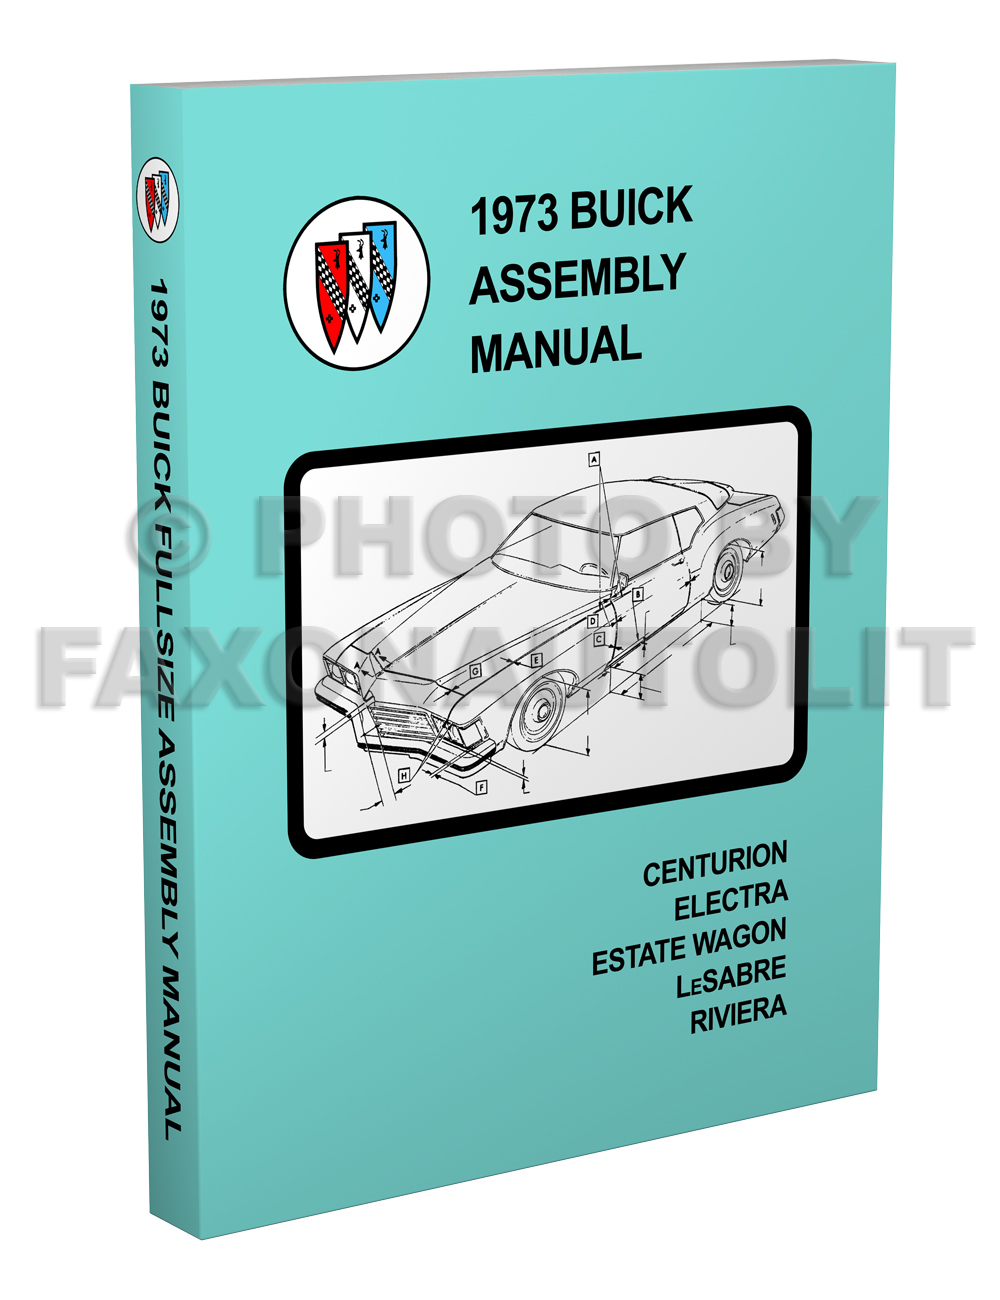 1973 Buick Factory Assembly Manual Reprint Riviera LeSabre Electra Centurion